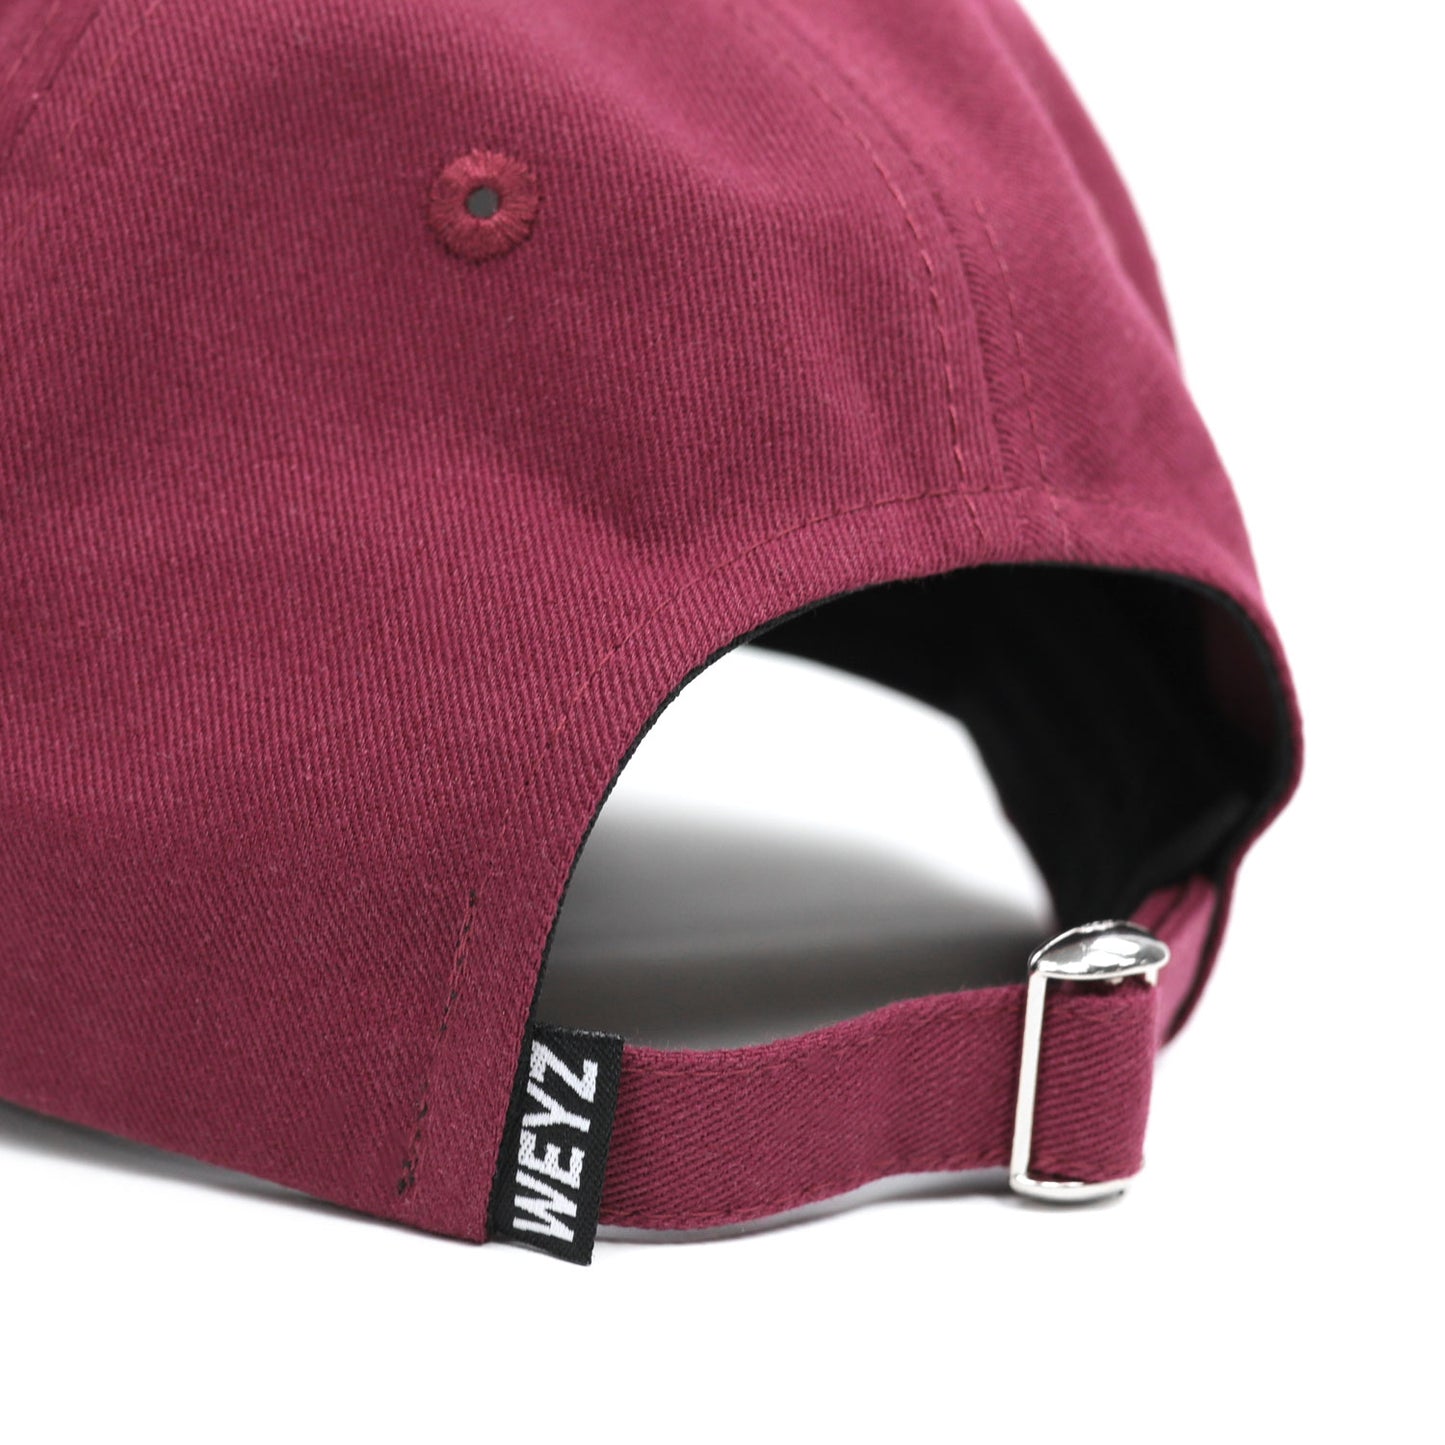 Weyz cotton baseball caps signature bordeaux adjustable strap